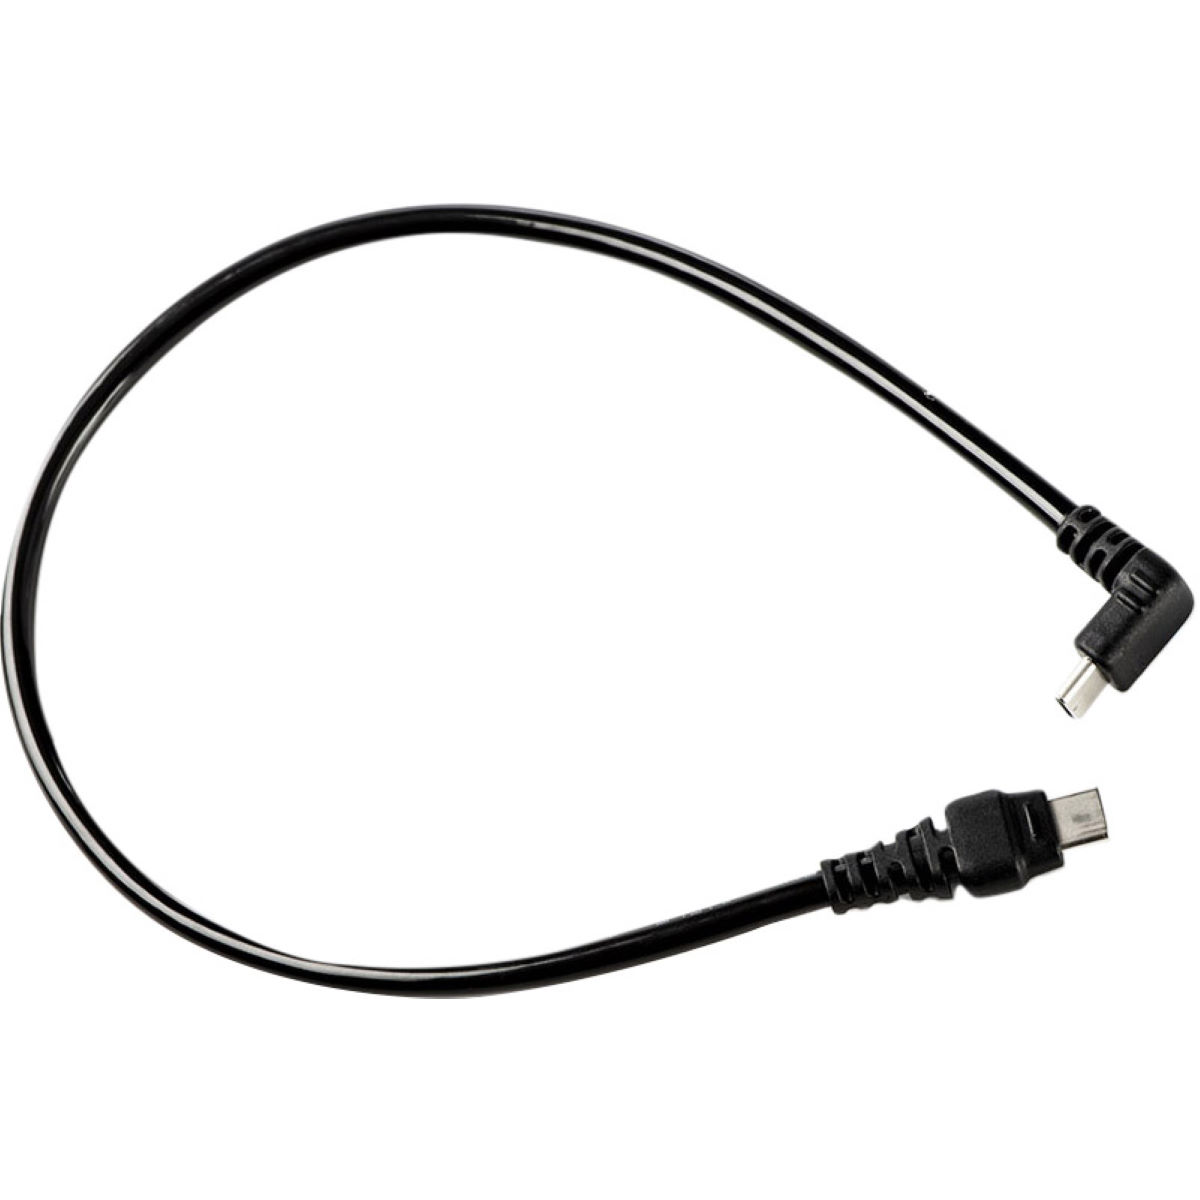 Cable de alimentación Gloworm USB-C (G2.0) - Recambios para luces